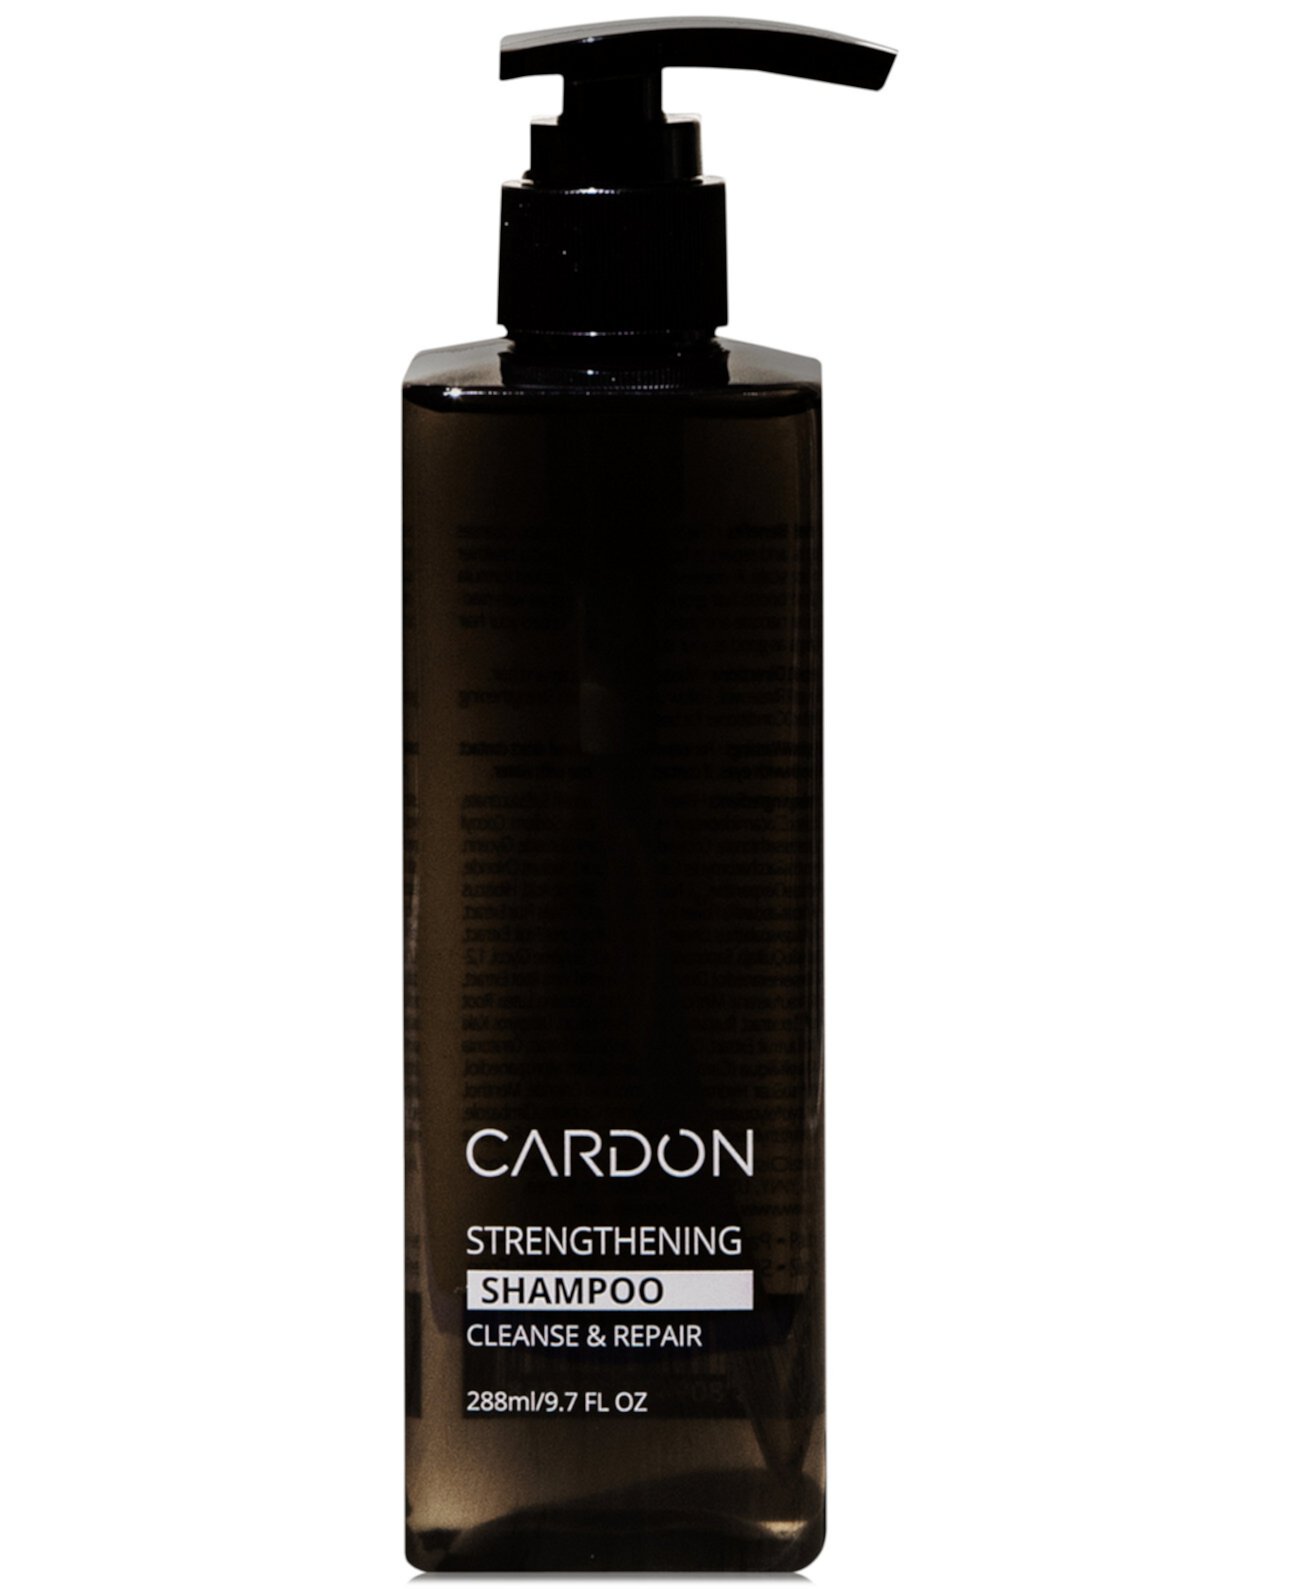 Strengthening Shampoo, 9.7 oz. Cardon